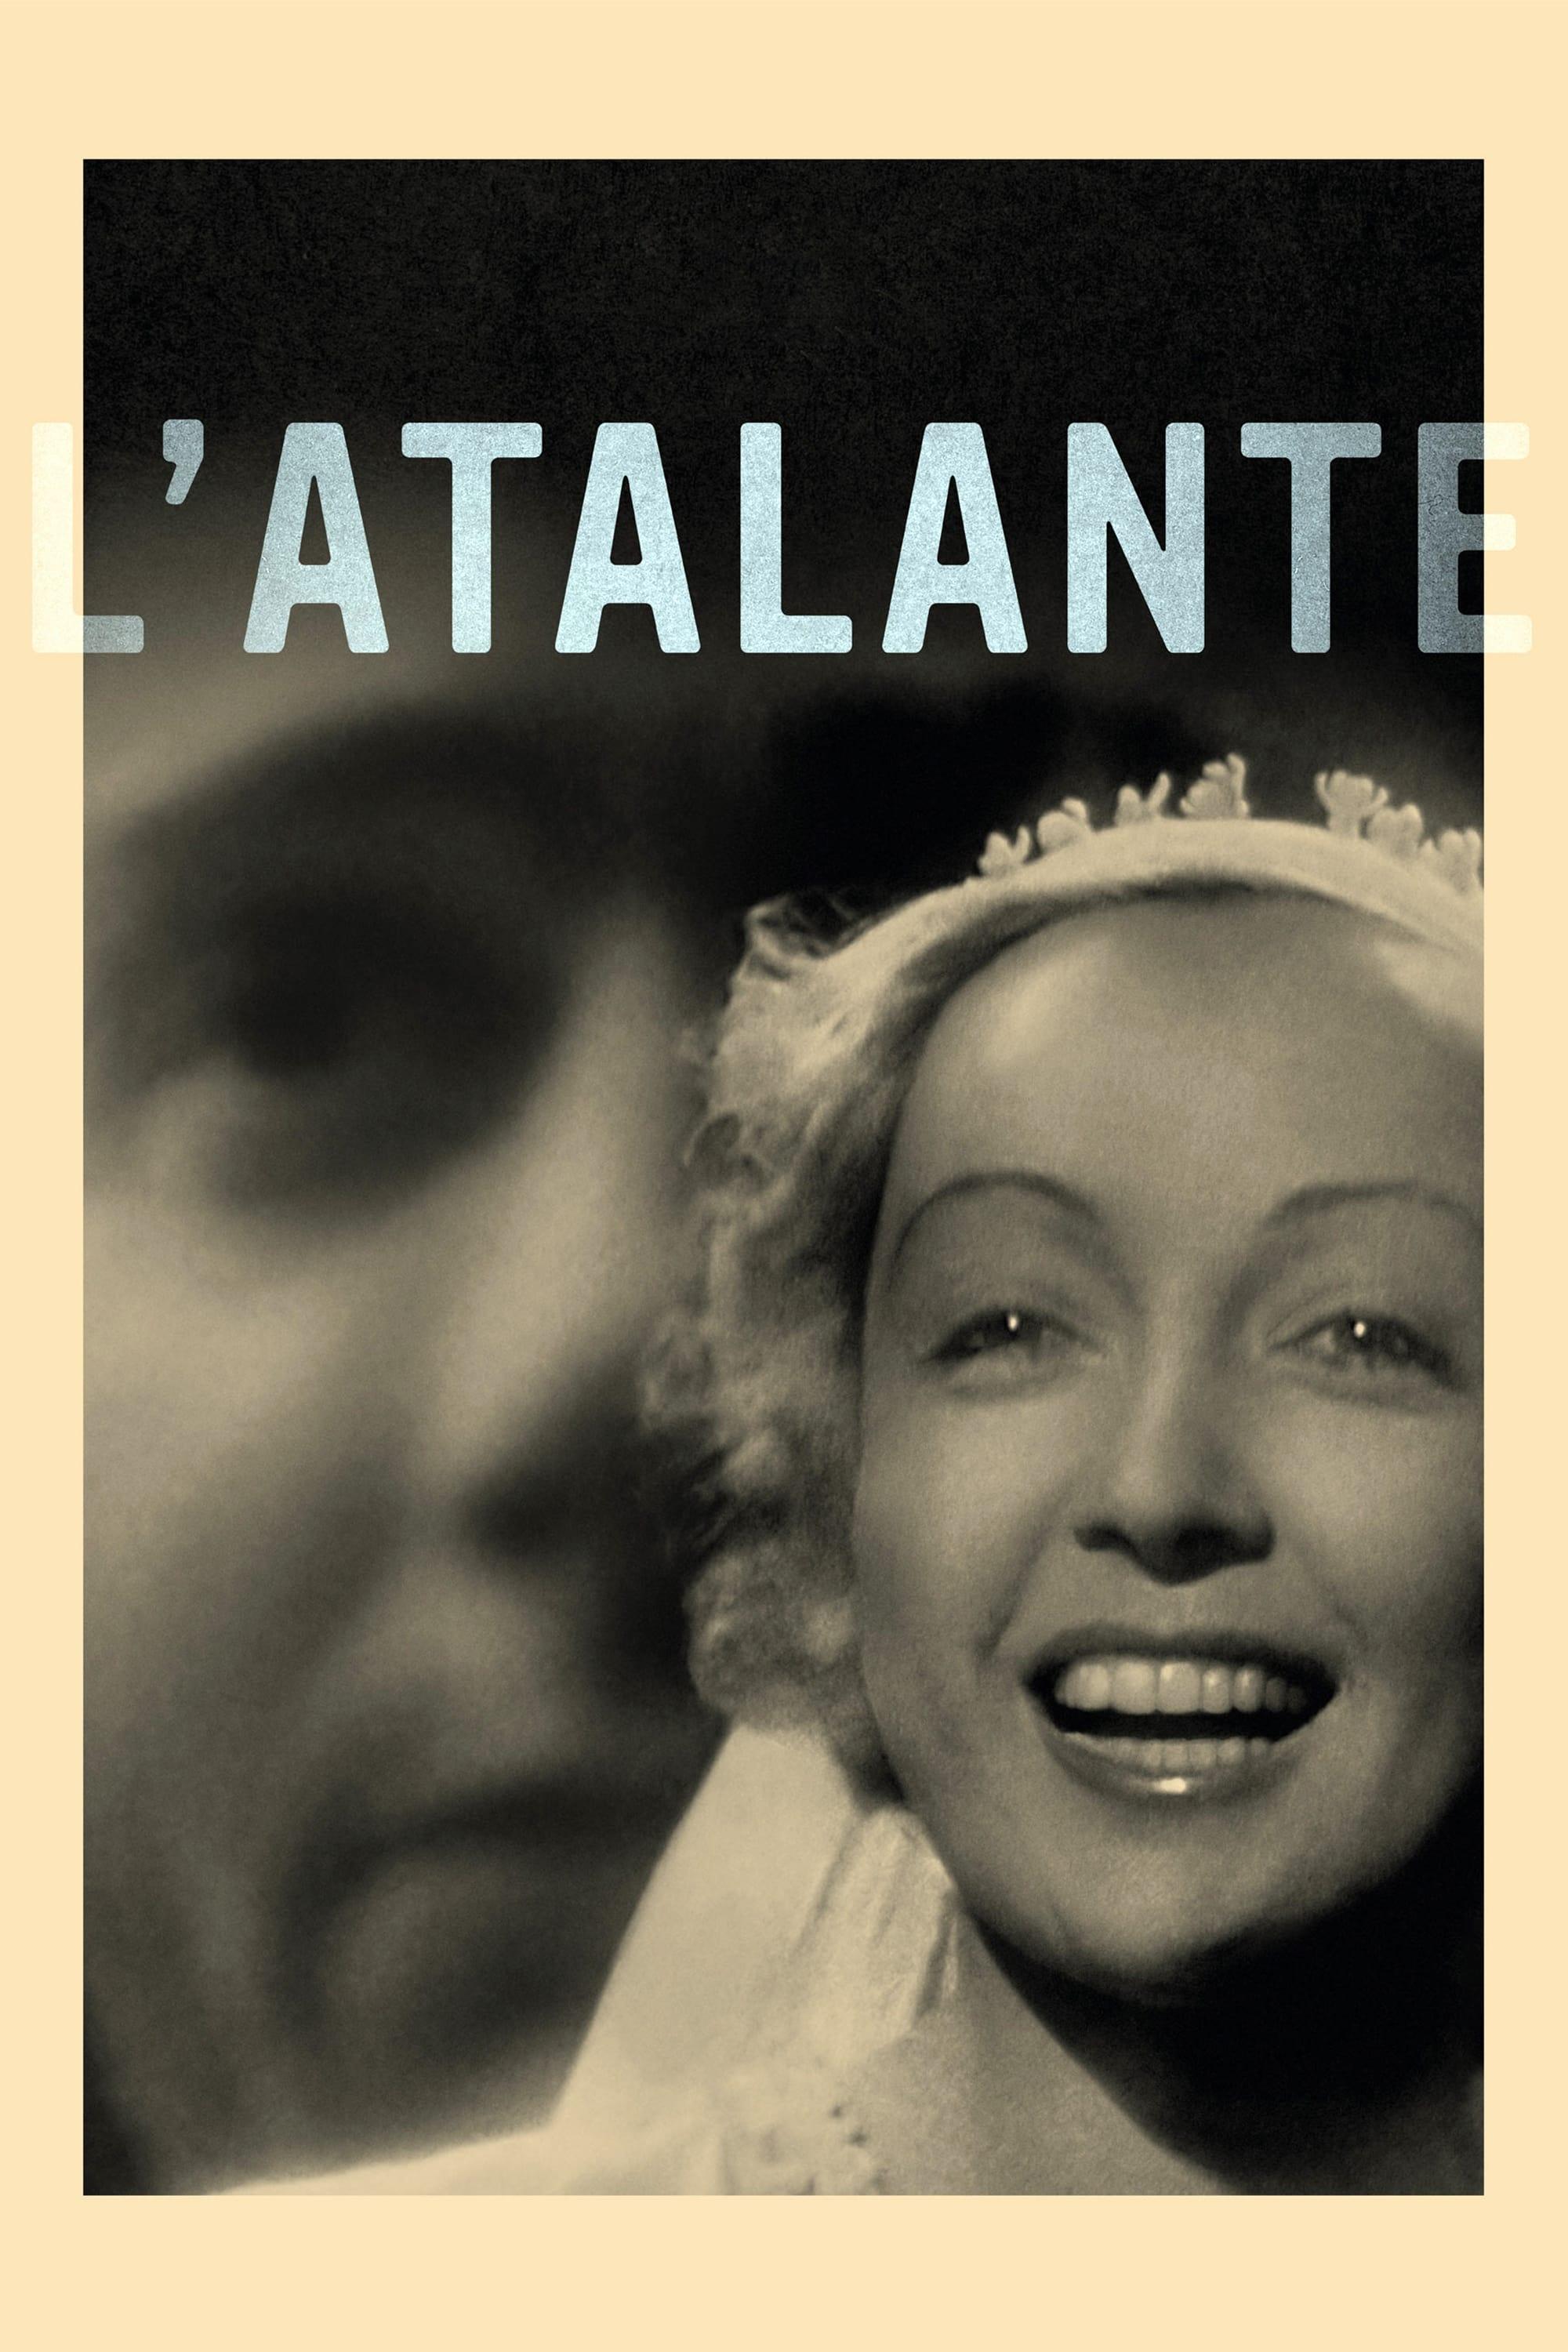 L'Atalante poster